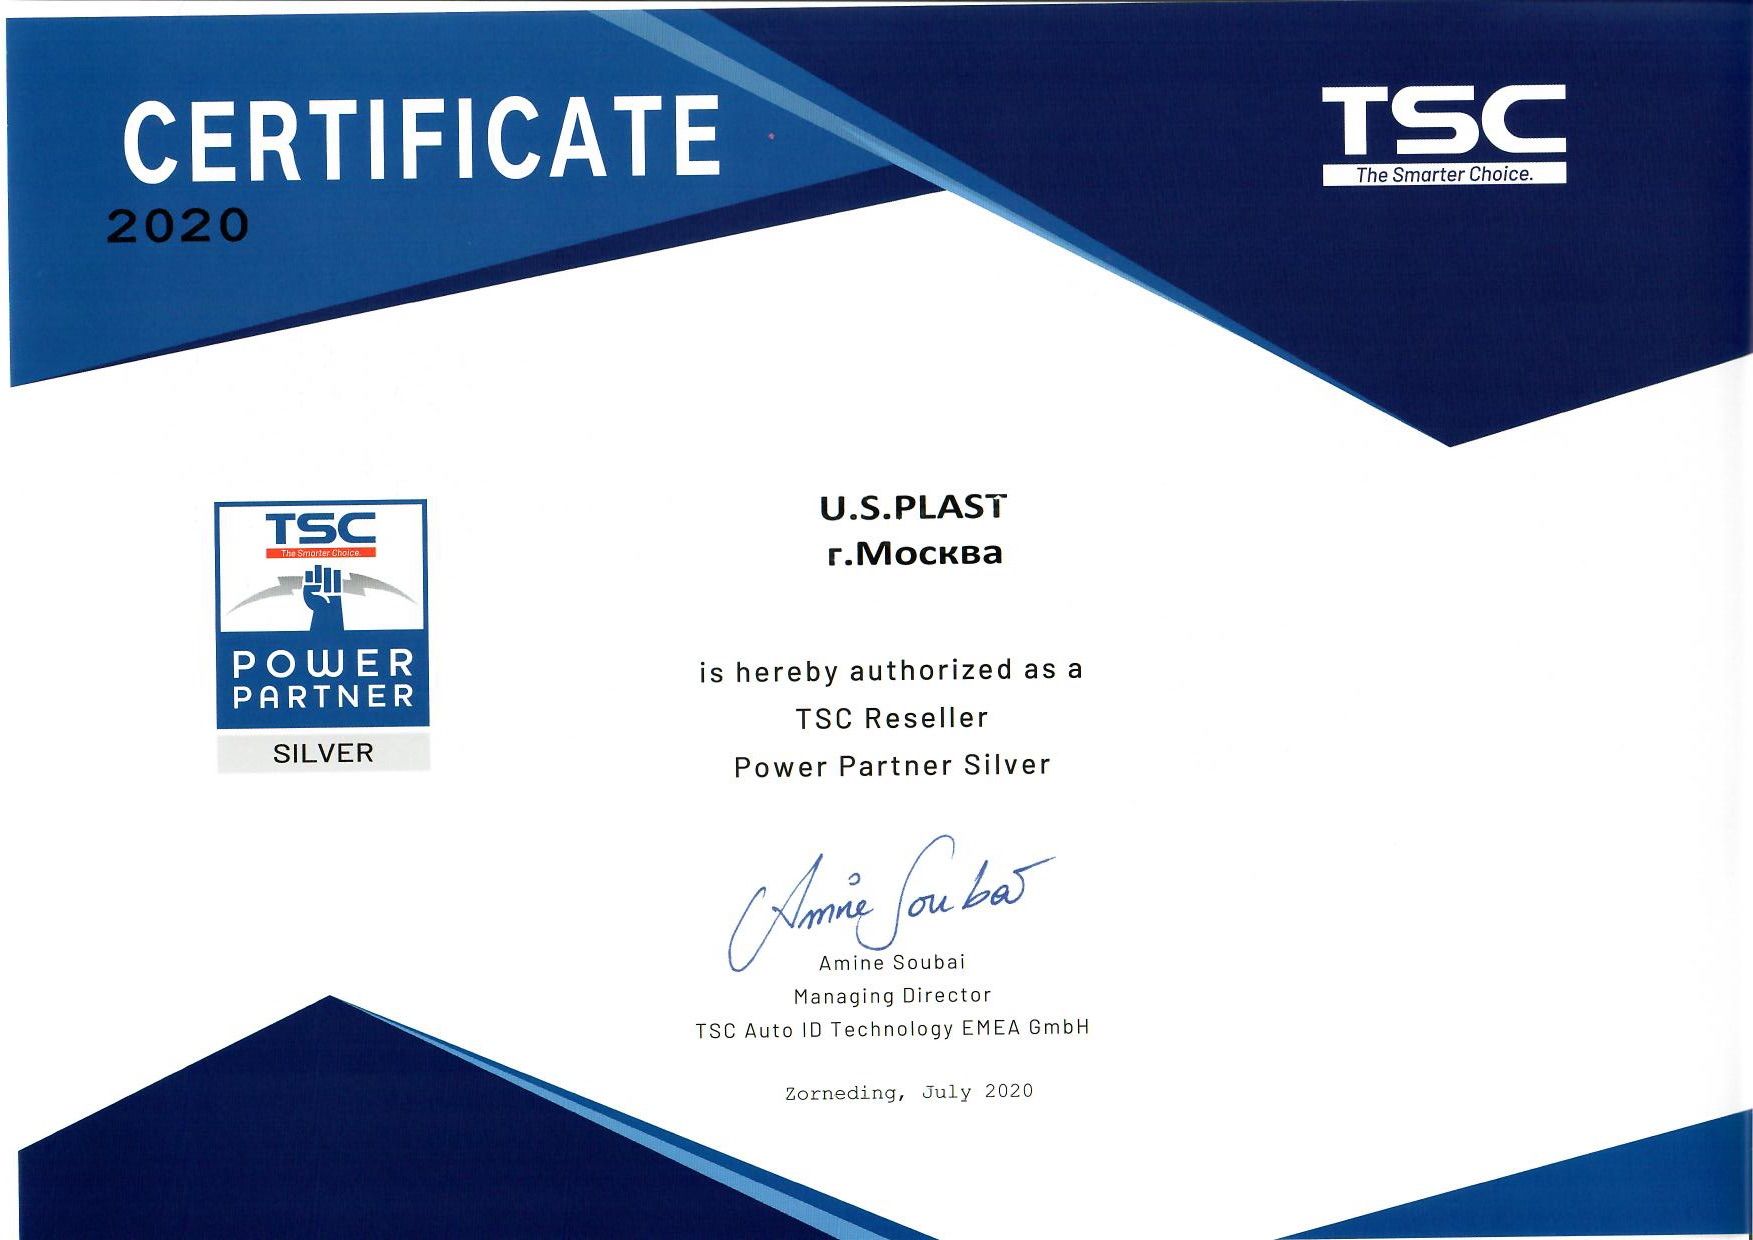 ООО "Ю.С. ПЛАСТ" - официальный партнер компании TSC (Taiwan Semiconductor)